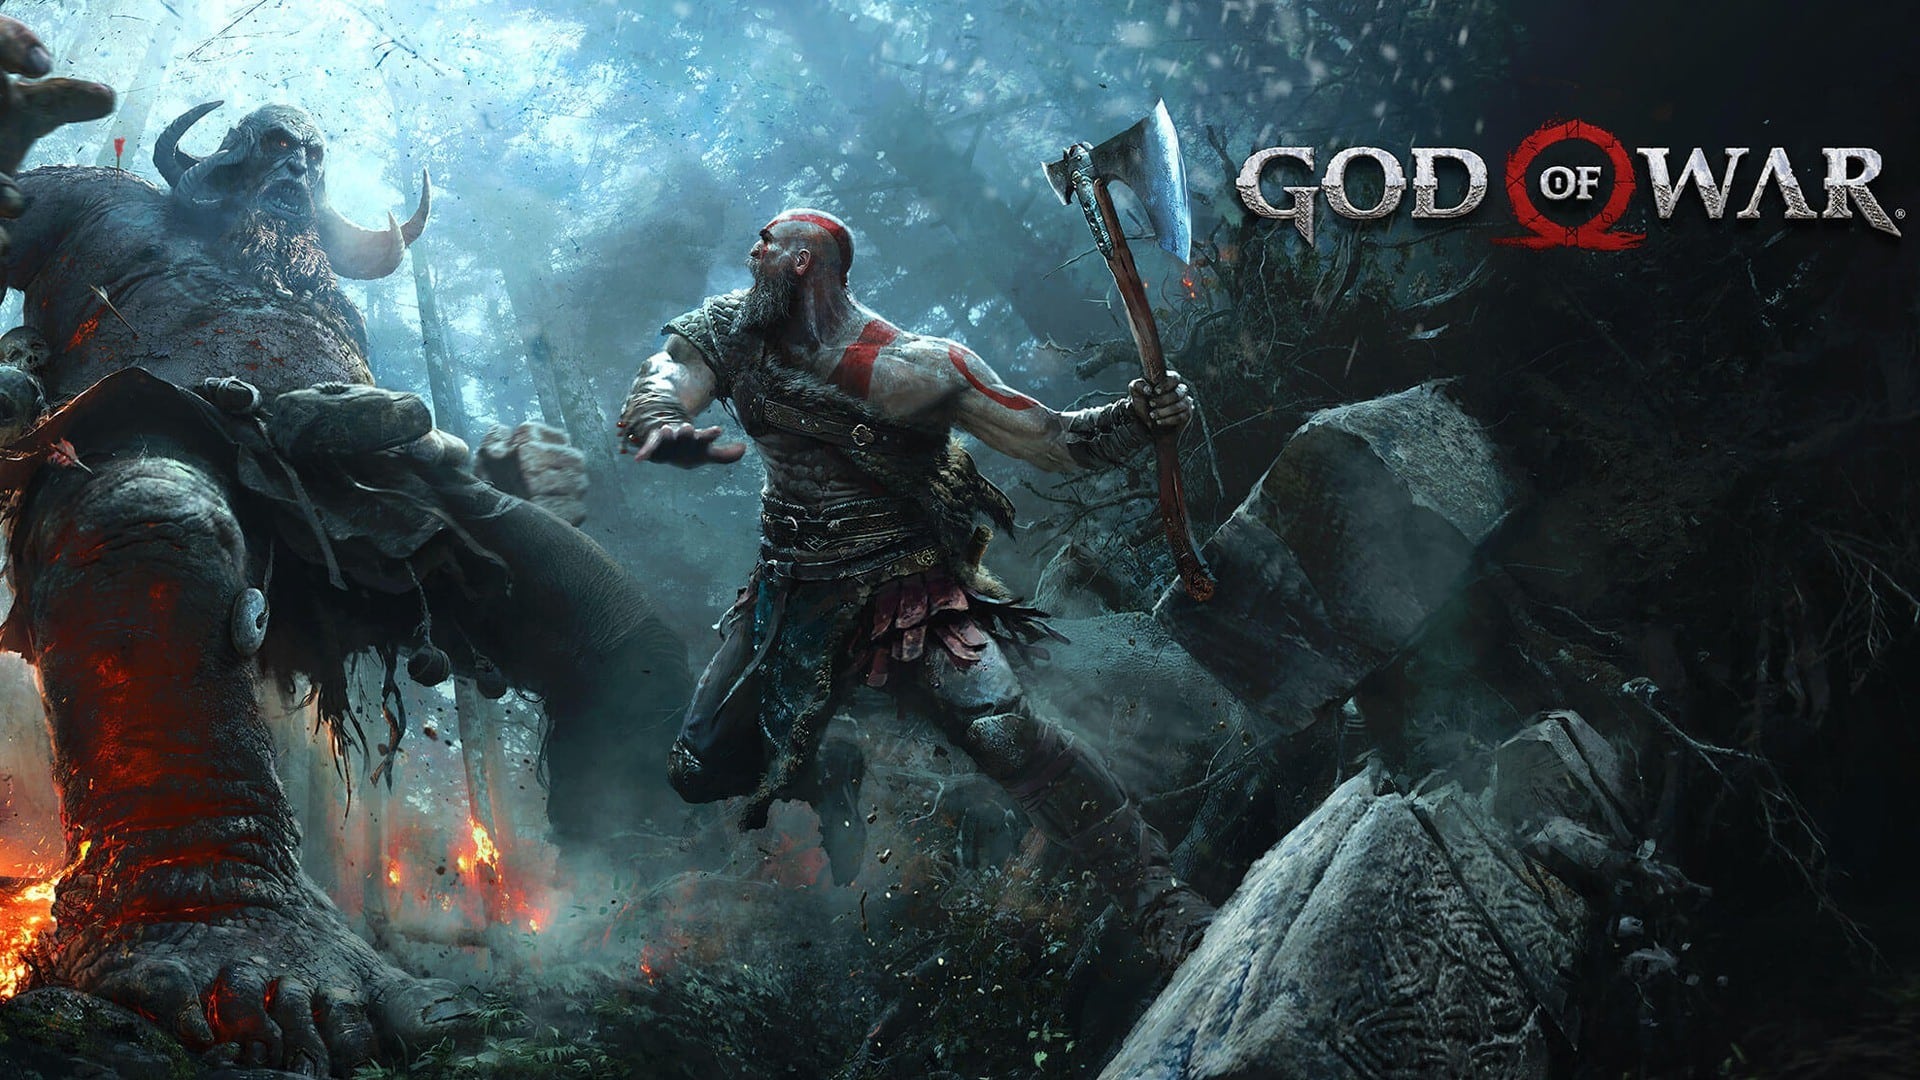 God of War - Análise PC Análise - Gamereactor